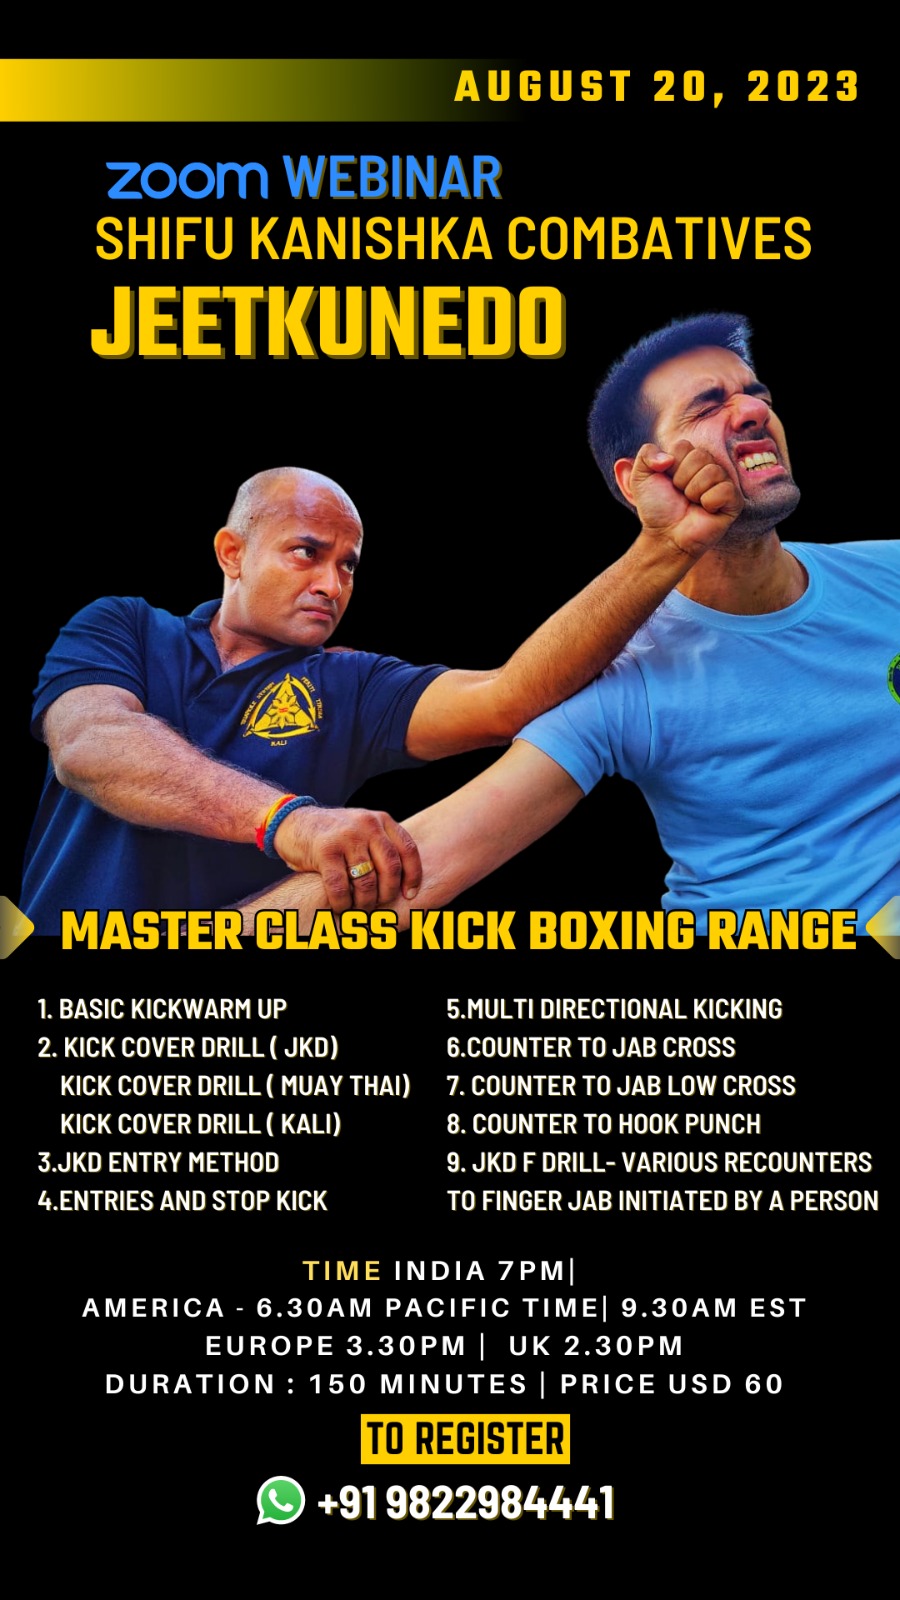 Jeetkunedo Master Class (Kickboxing Range)